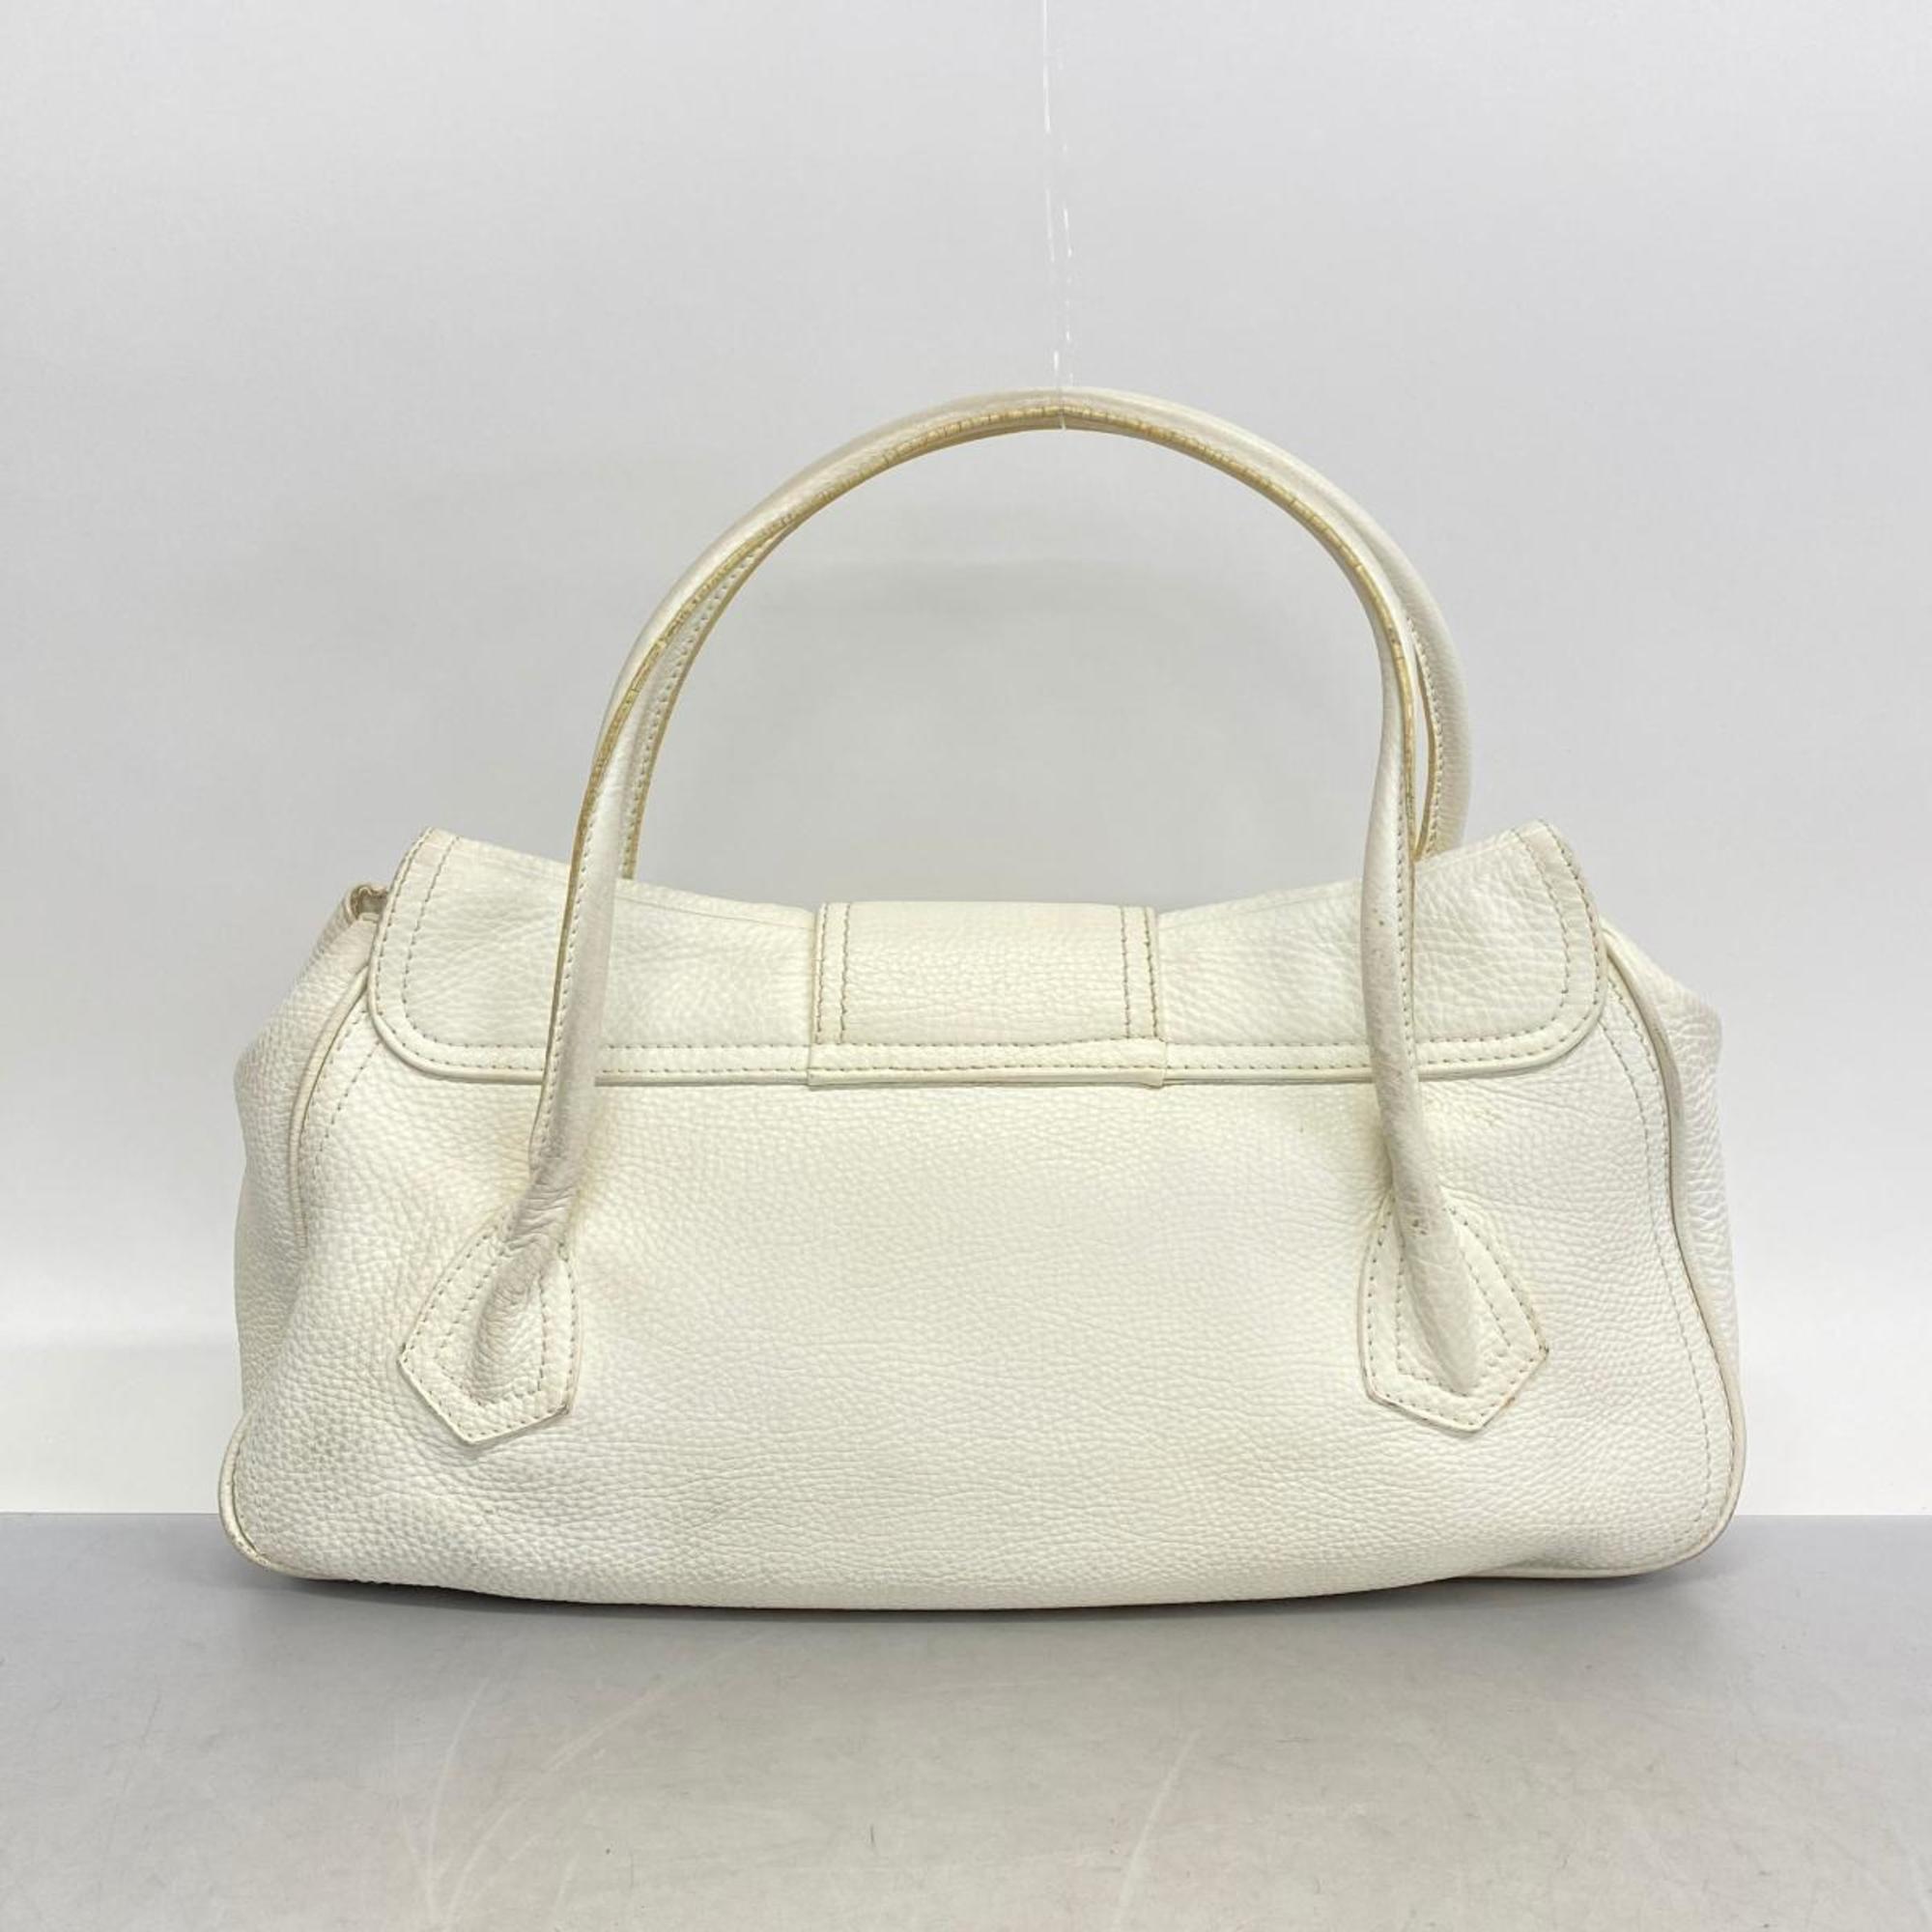 Celine handbag leather white ladies